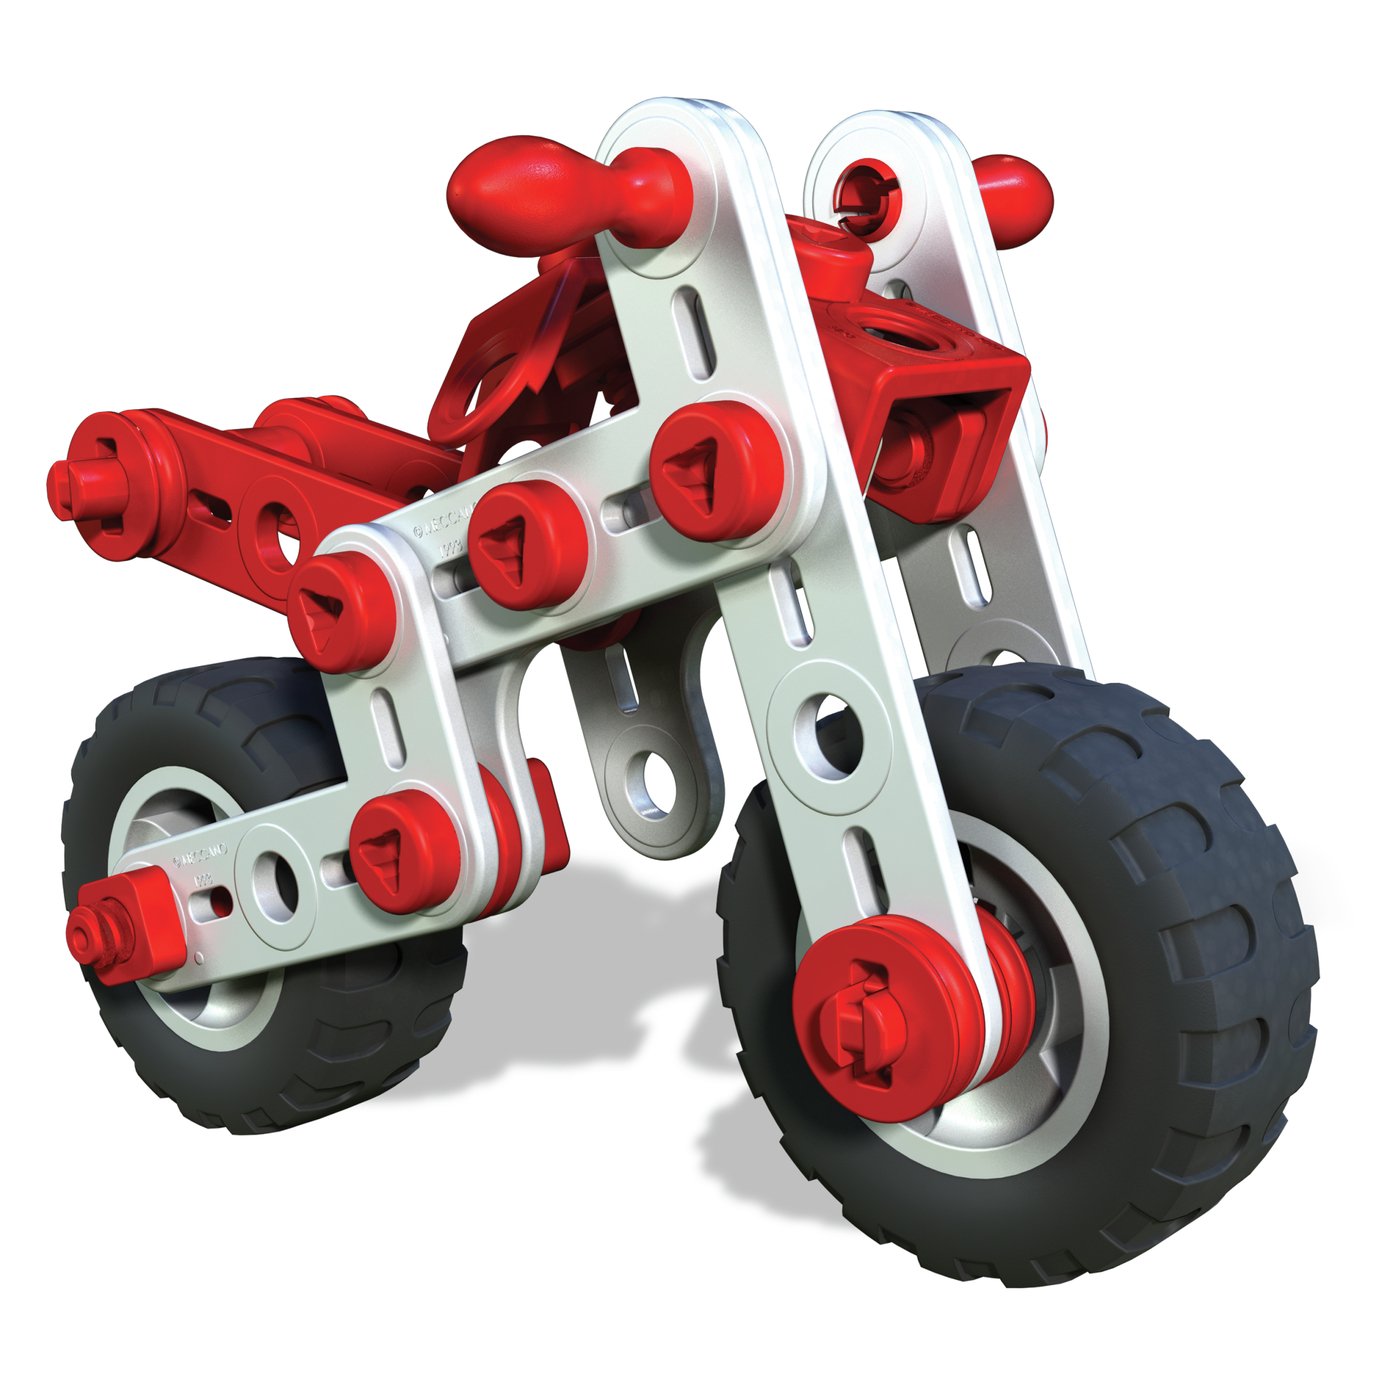 Meccano Junior Action Build Motorcycle Review